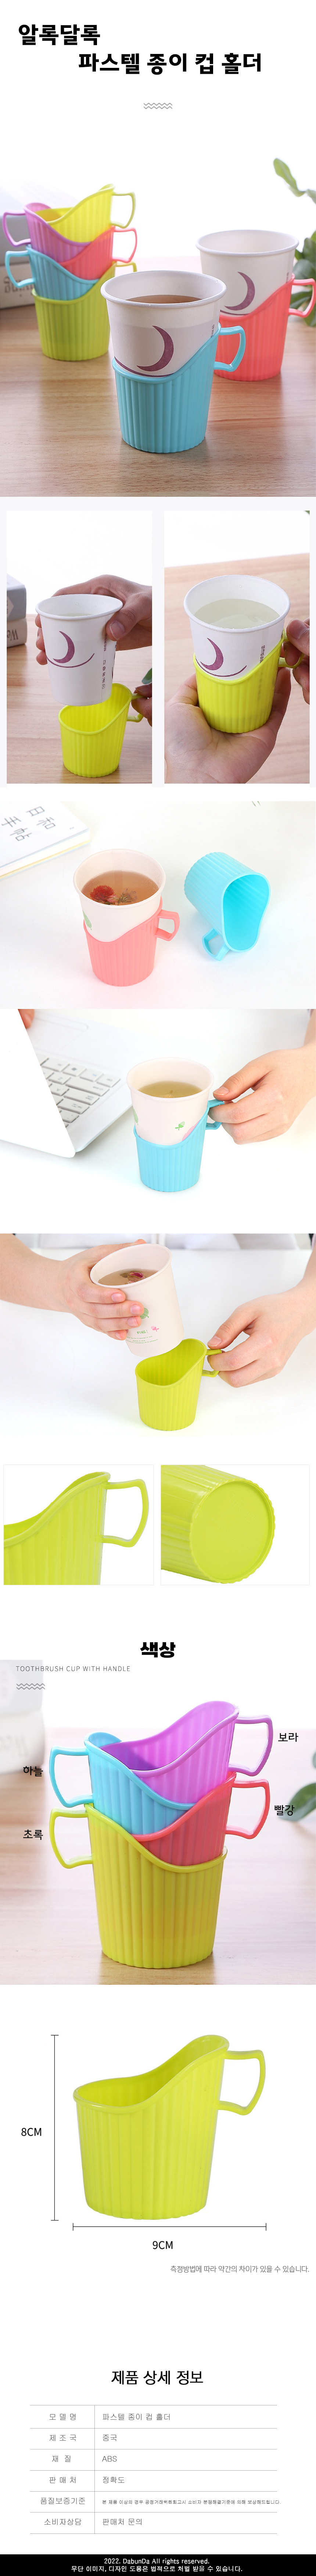 paper cup holder.jpg